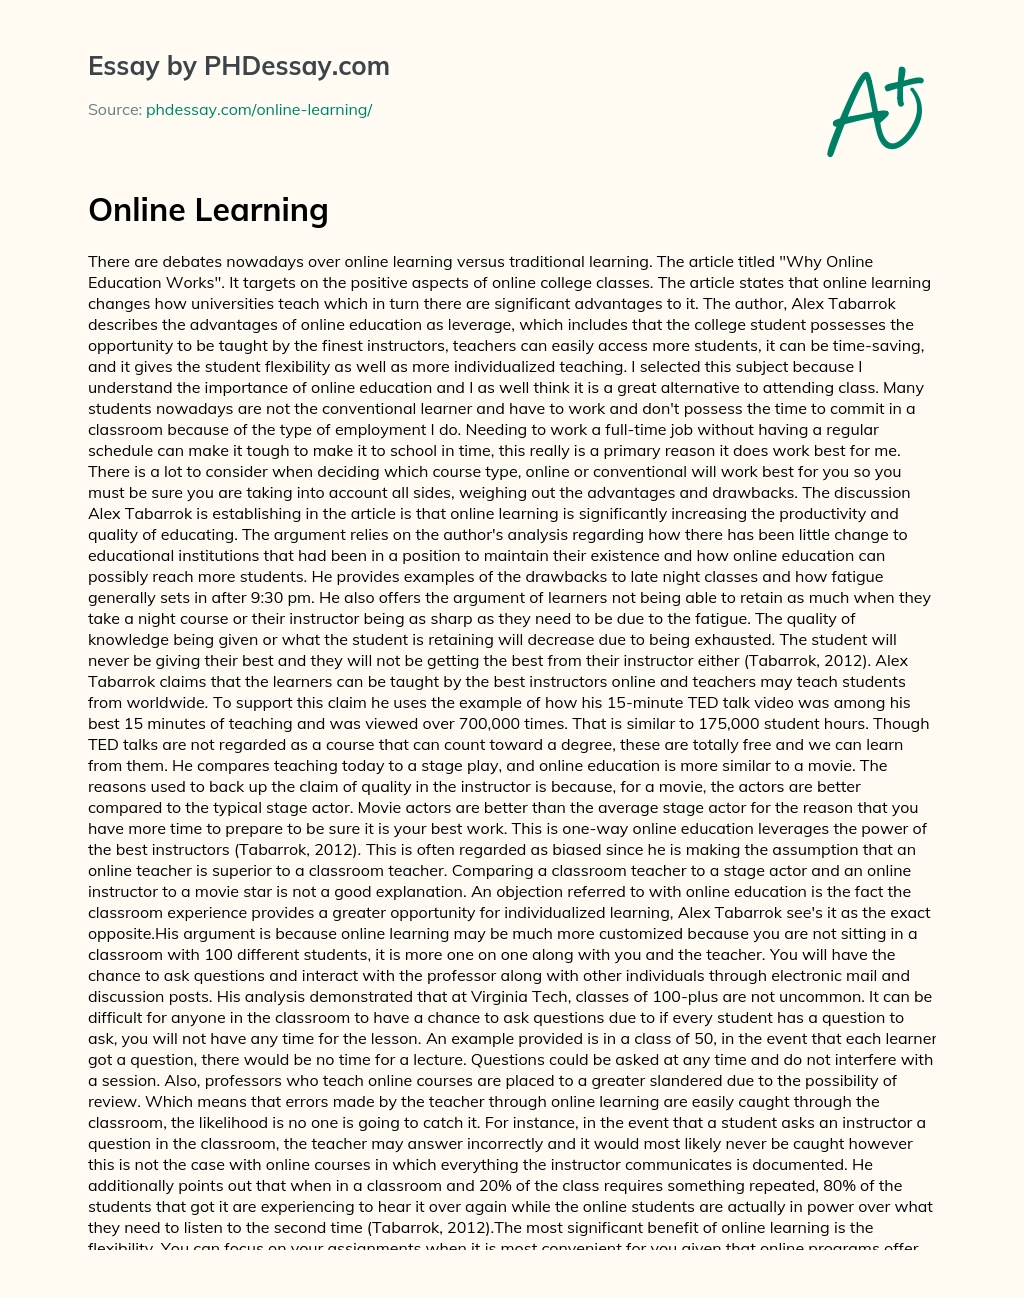 Online Learning essay